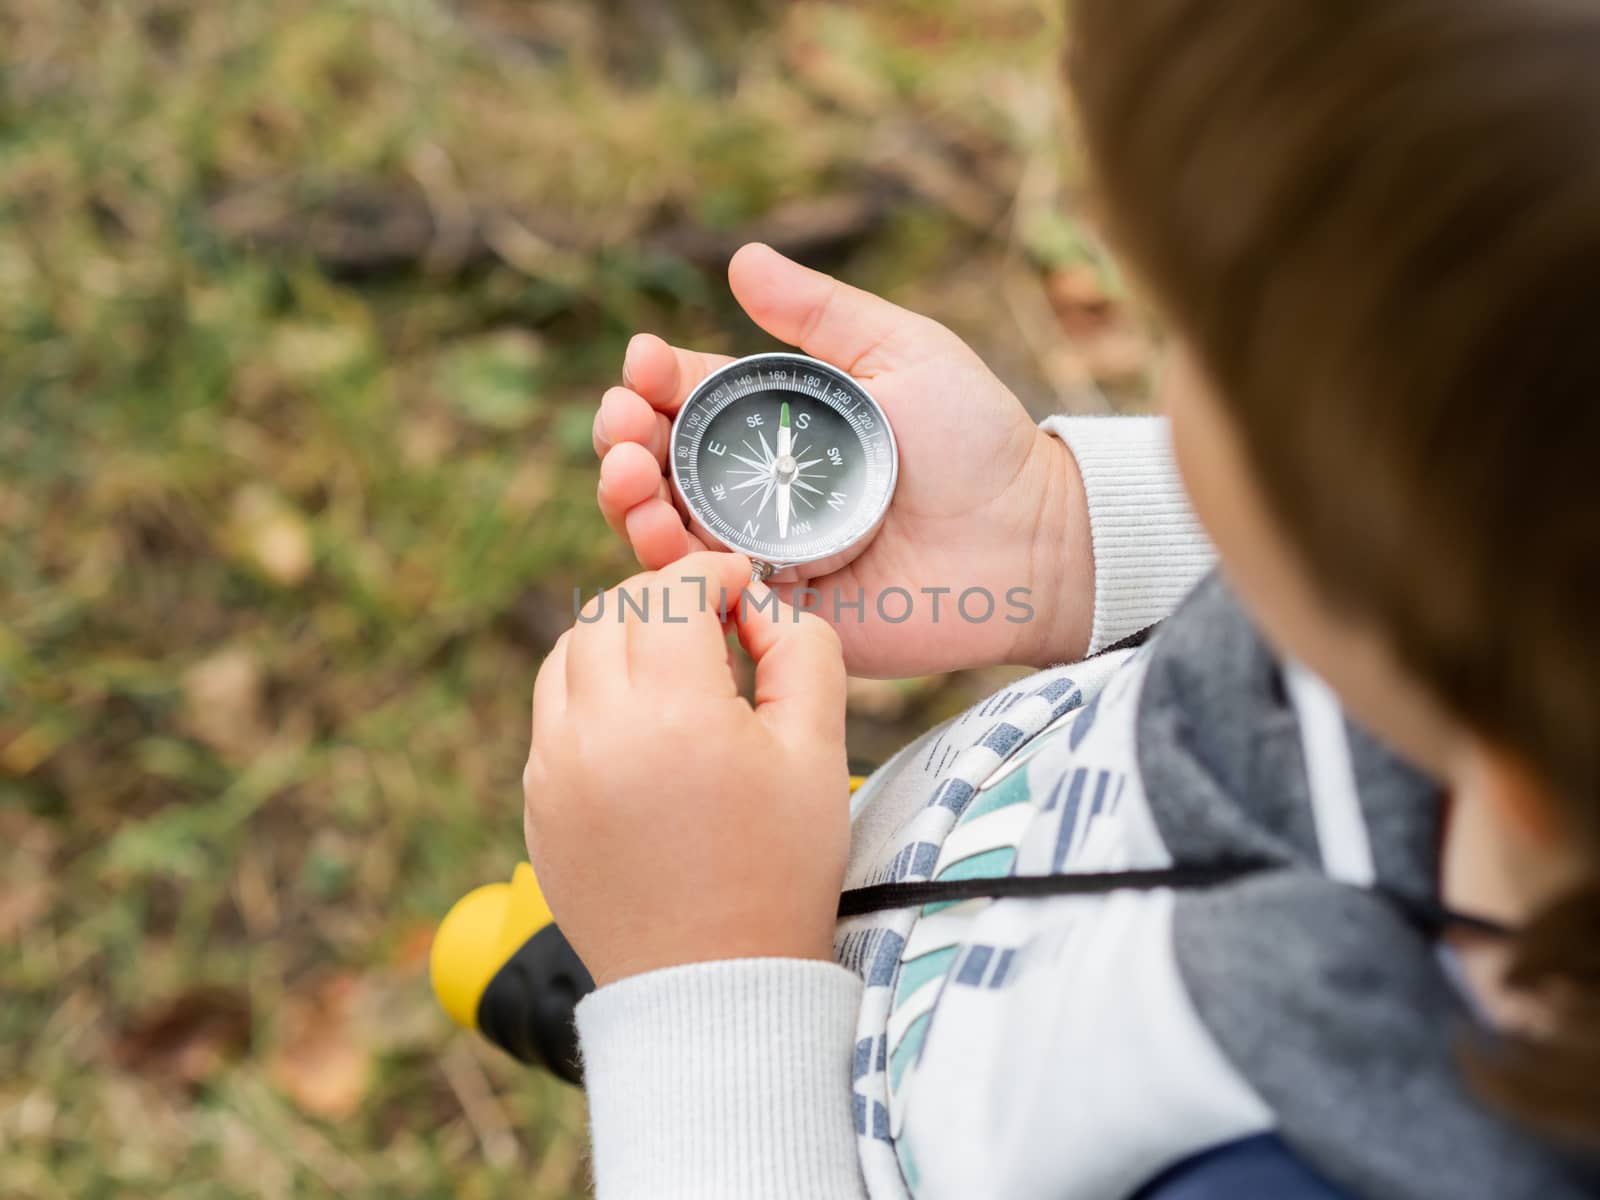 Little explorer on hike in forest. Boy with binoculars, backpack by aksenovko